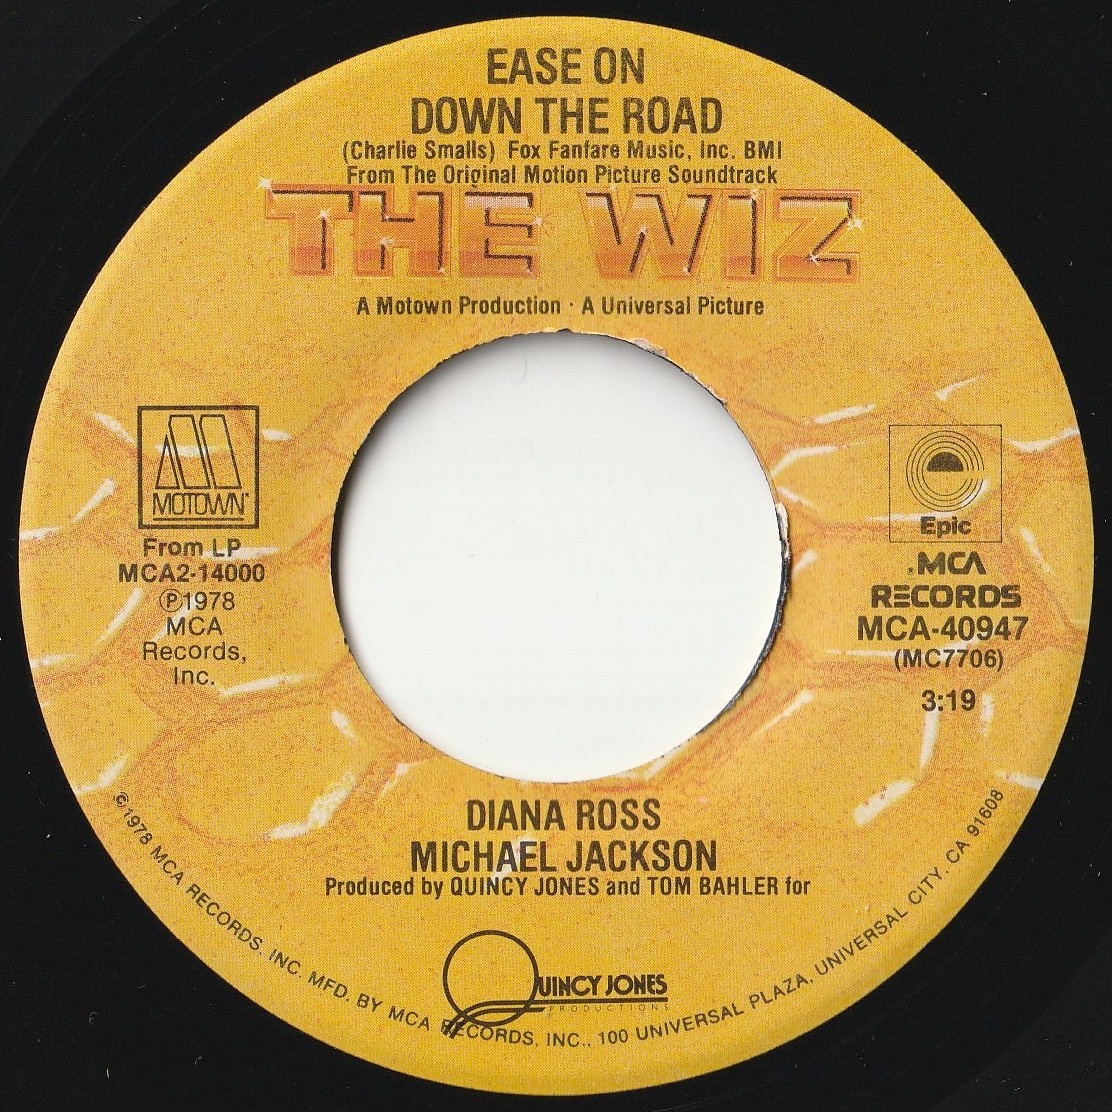 Diana Ross, Michael Jackson / Quincy Jones Ease On Down The Road MCA US MCA-40947 201635 SOUL DISCO ソウル レコード 7インチ 45_画像1